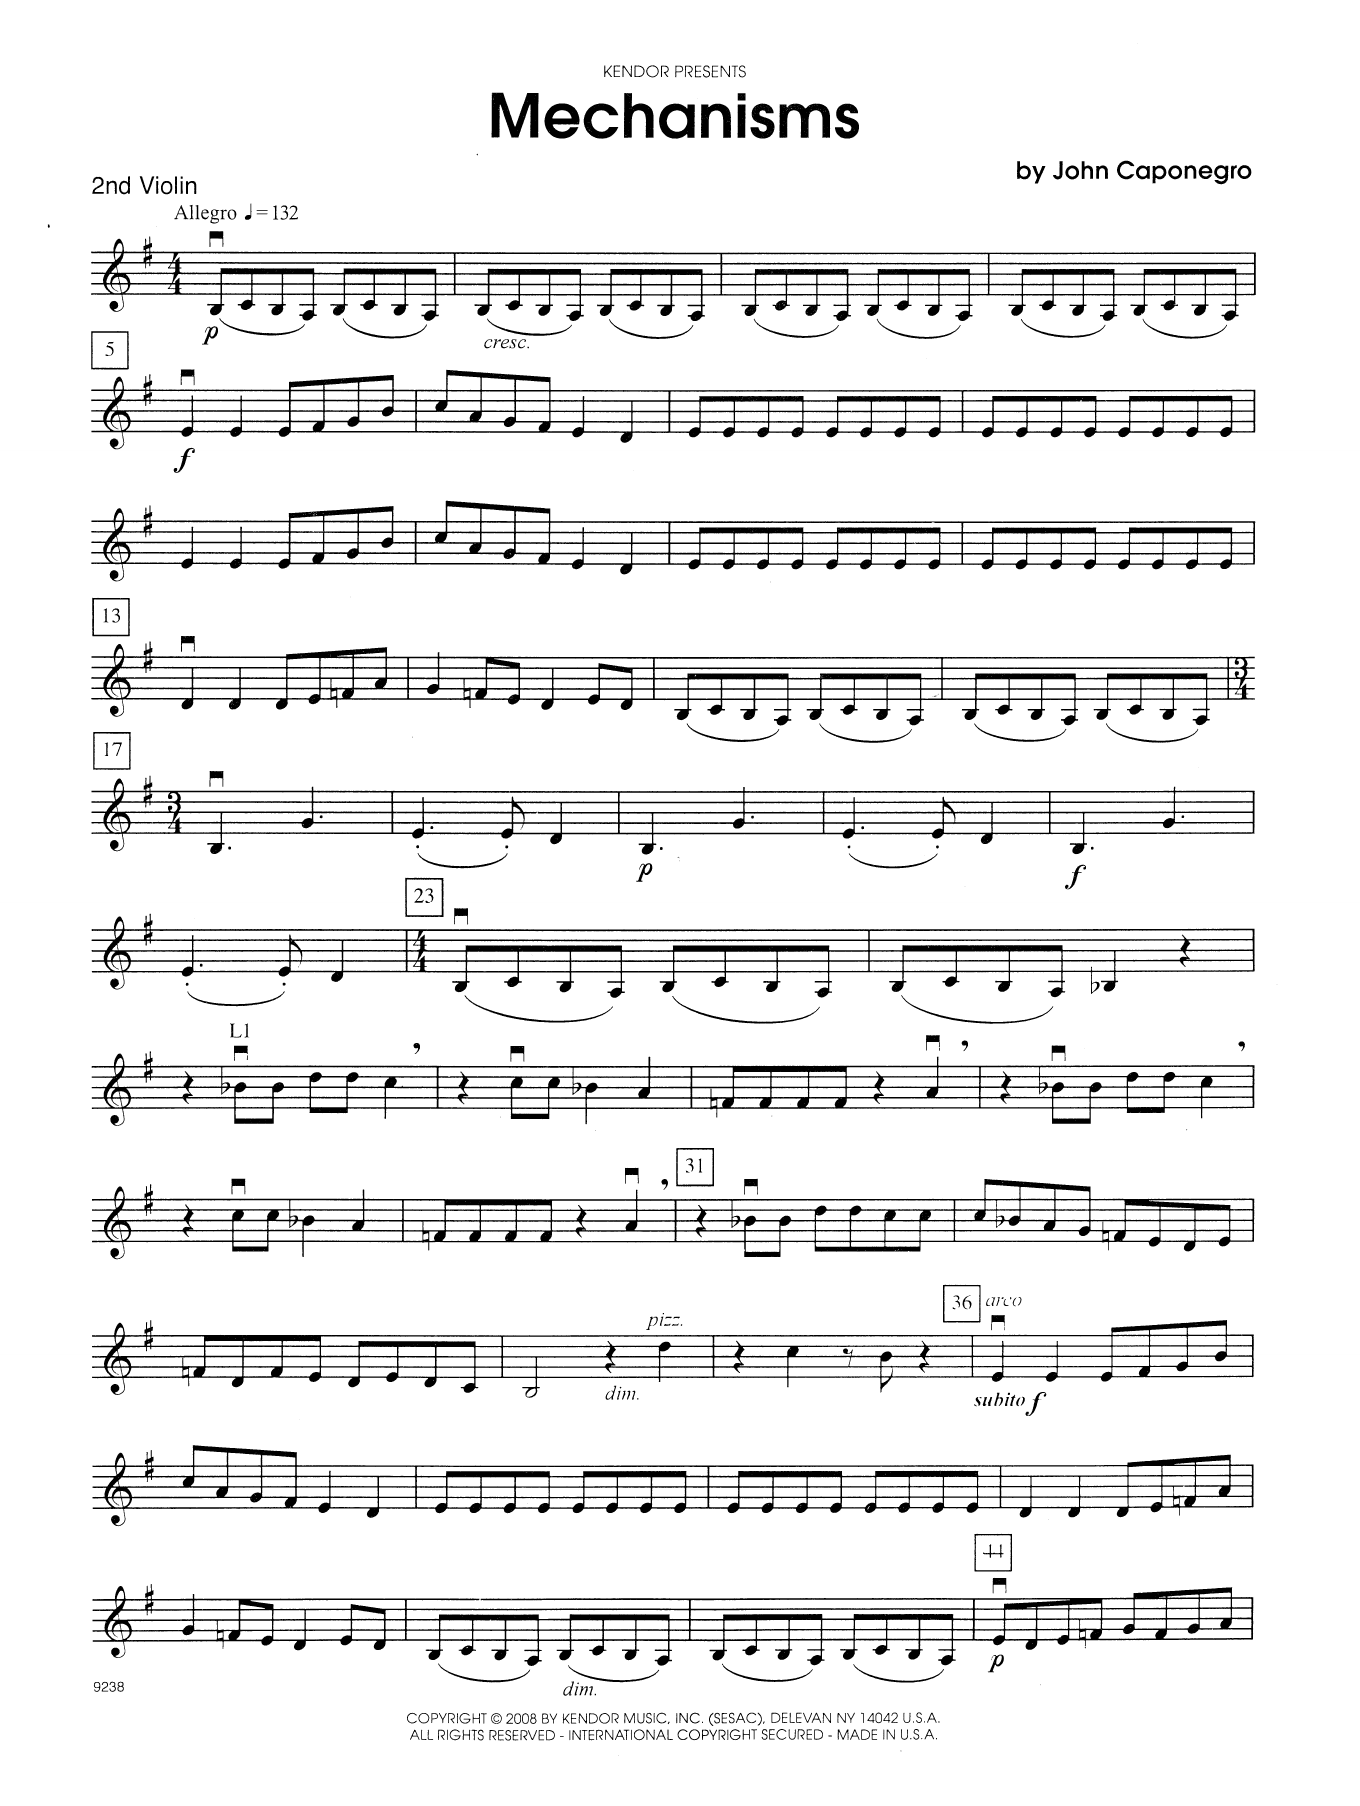 Download John Caponegro Mechanisms - 2nd Violin Sheet Music